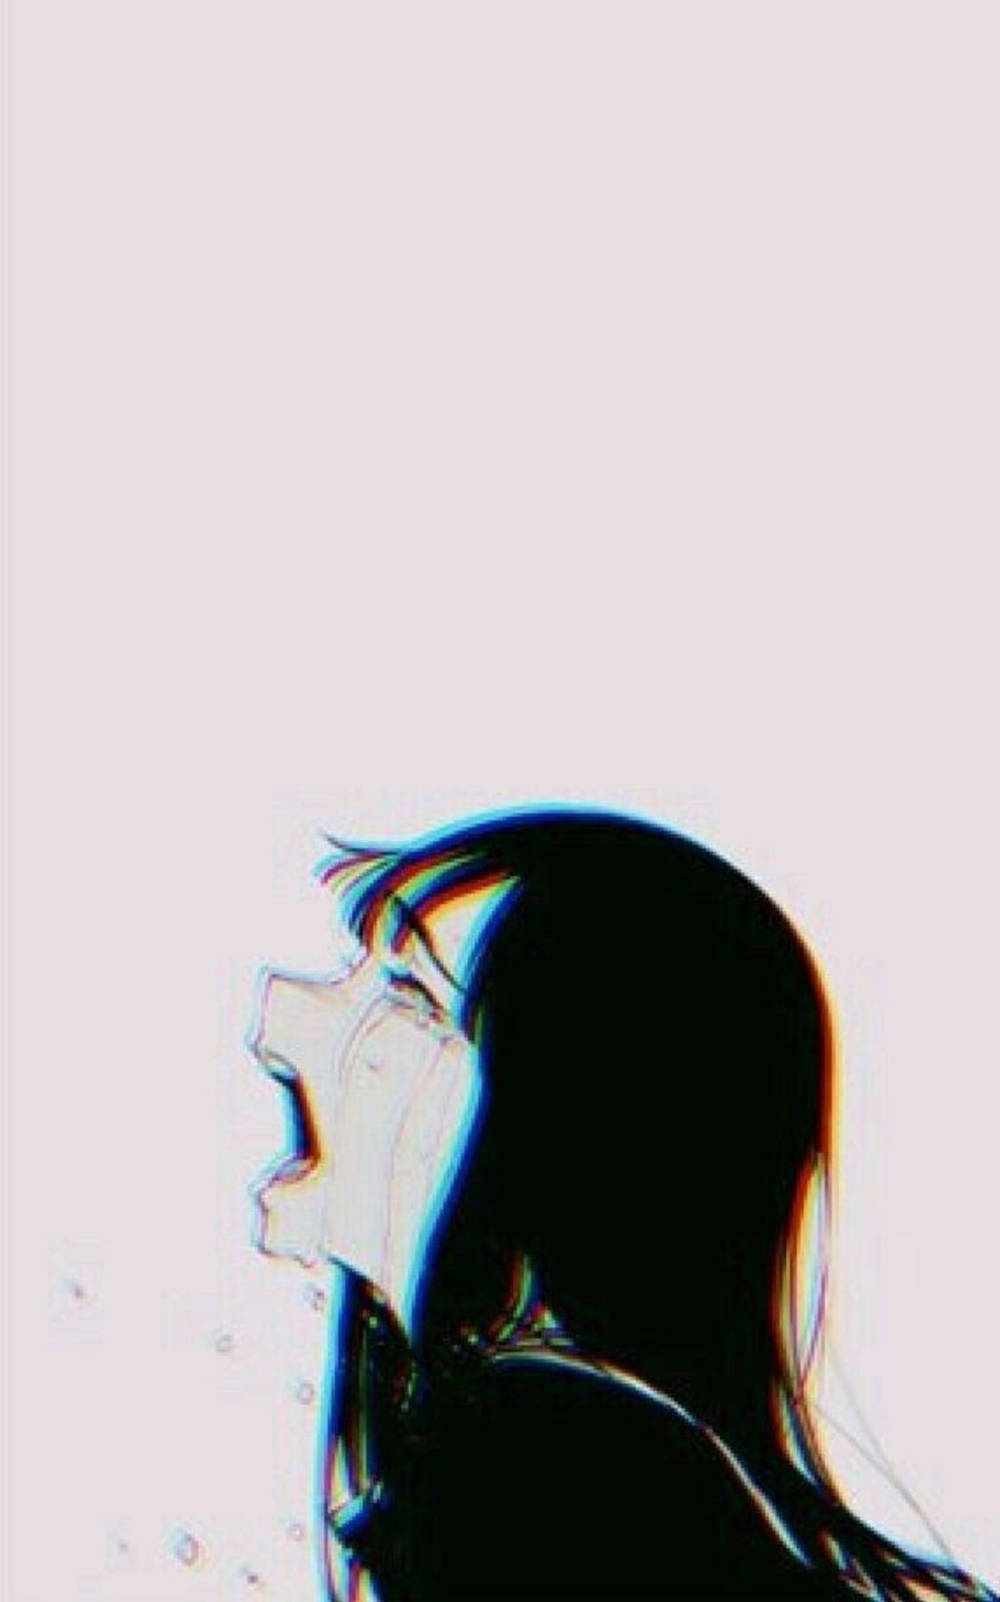 Details 85+ about depression wallpaper anime super cool -  .vn